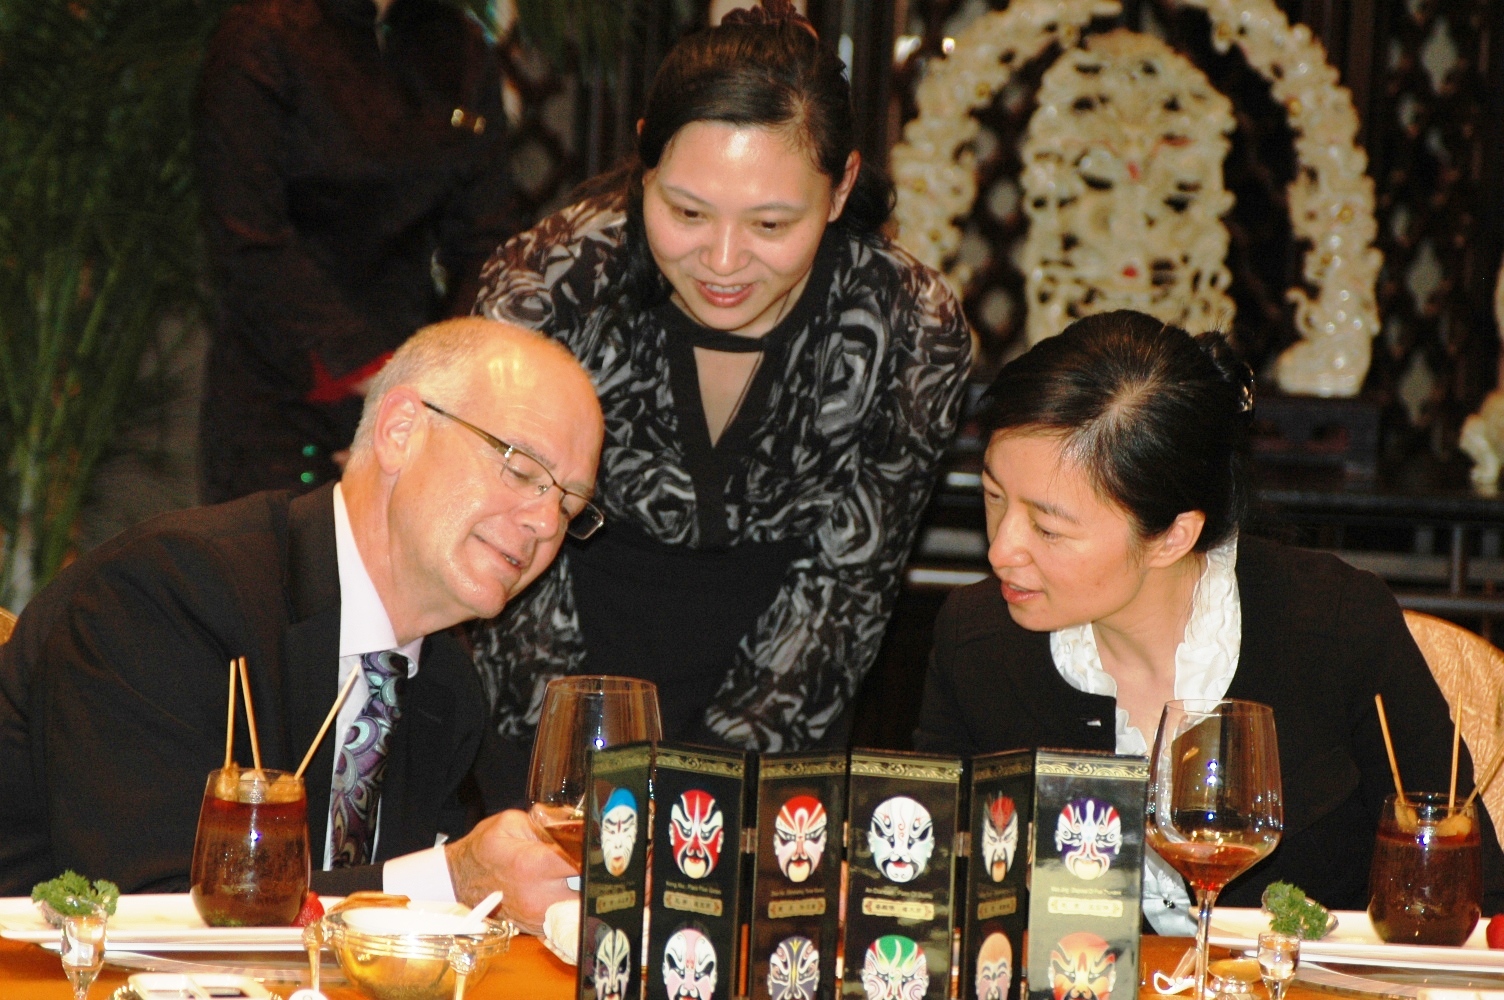 Victoria市长 Mr. Dean Fortin 2012年10月访问苏州